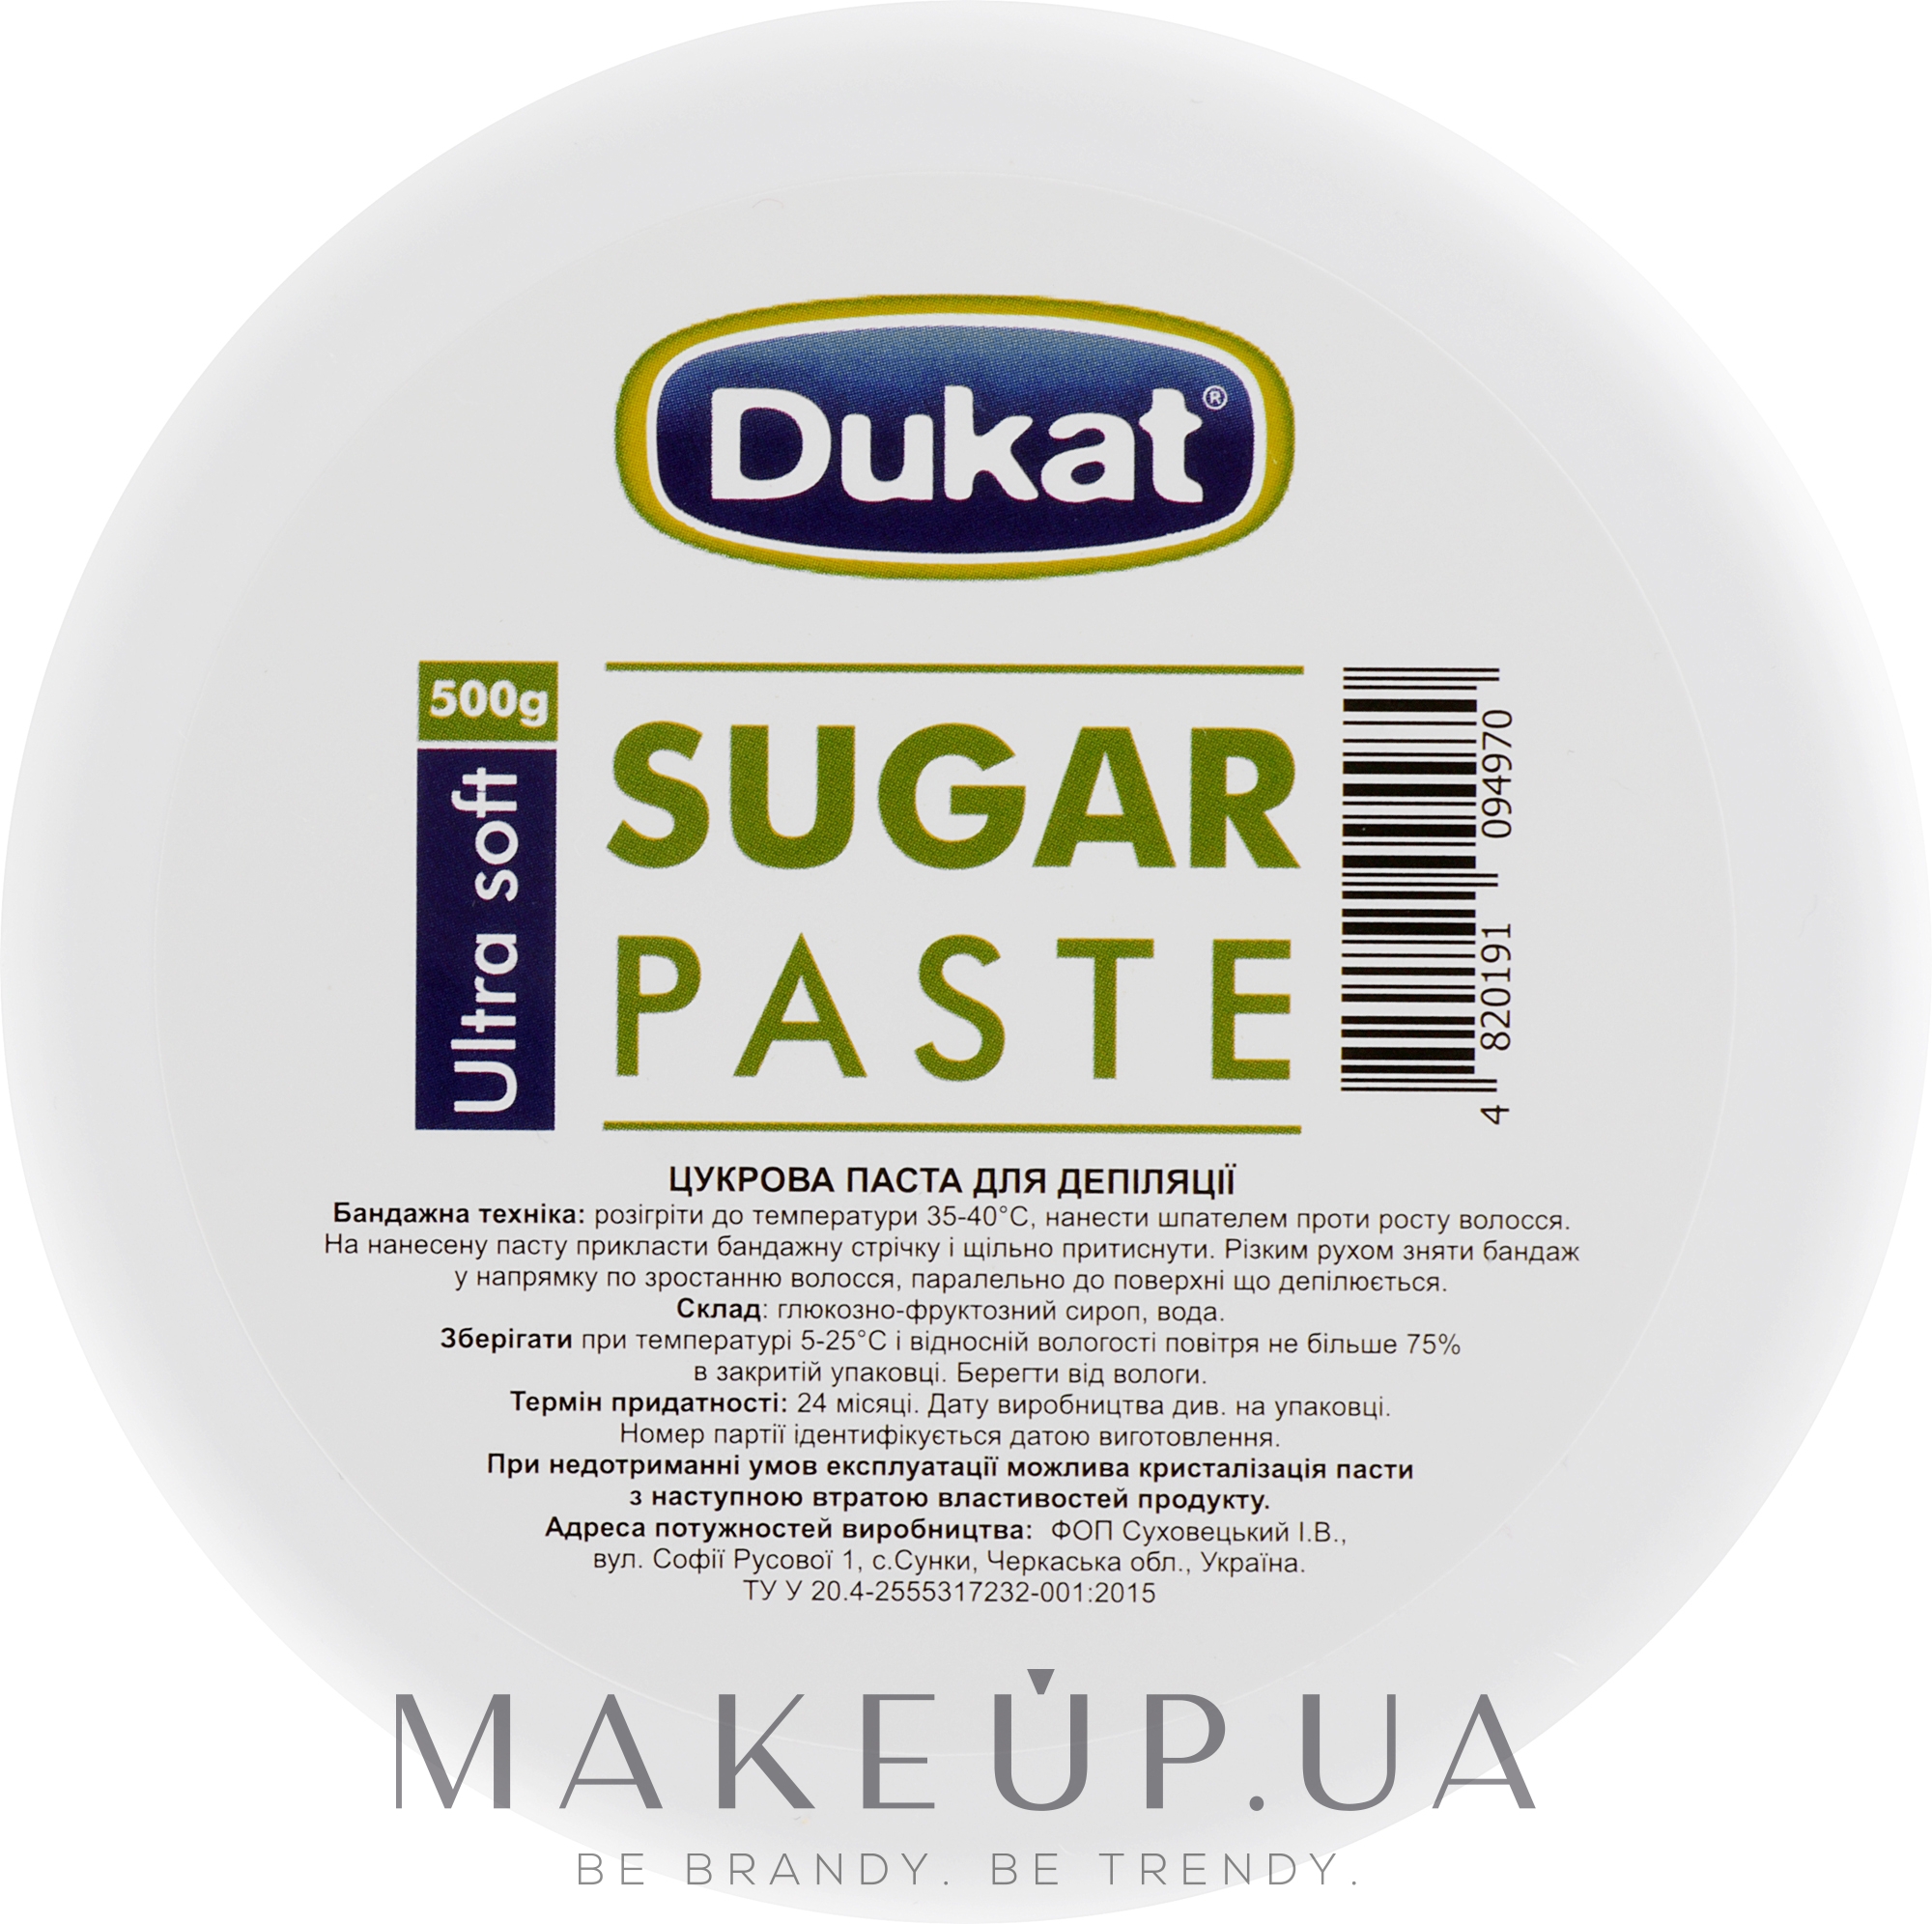 Сахарная паста для депиляции ультра мягкая - Dukat Sugar Paste Ultra Soft — фото 500g